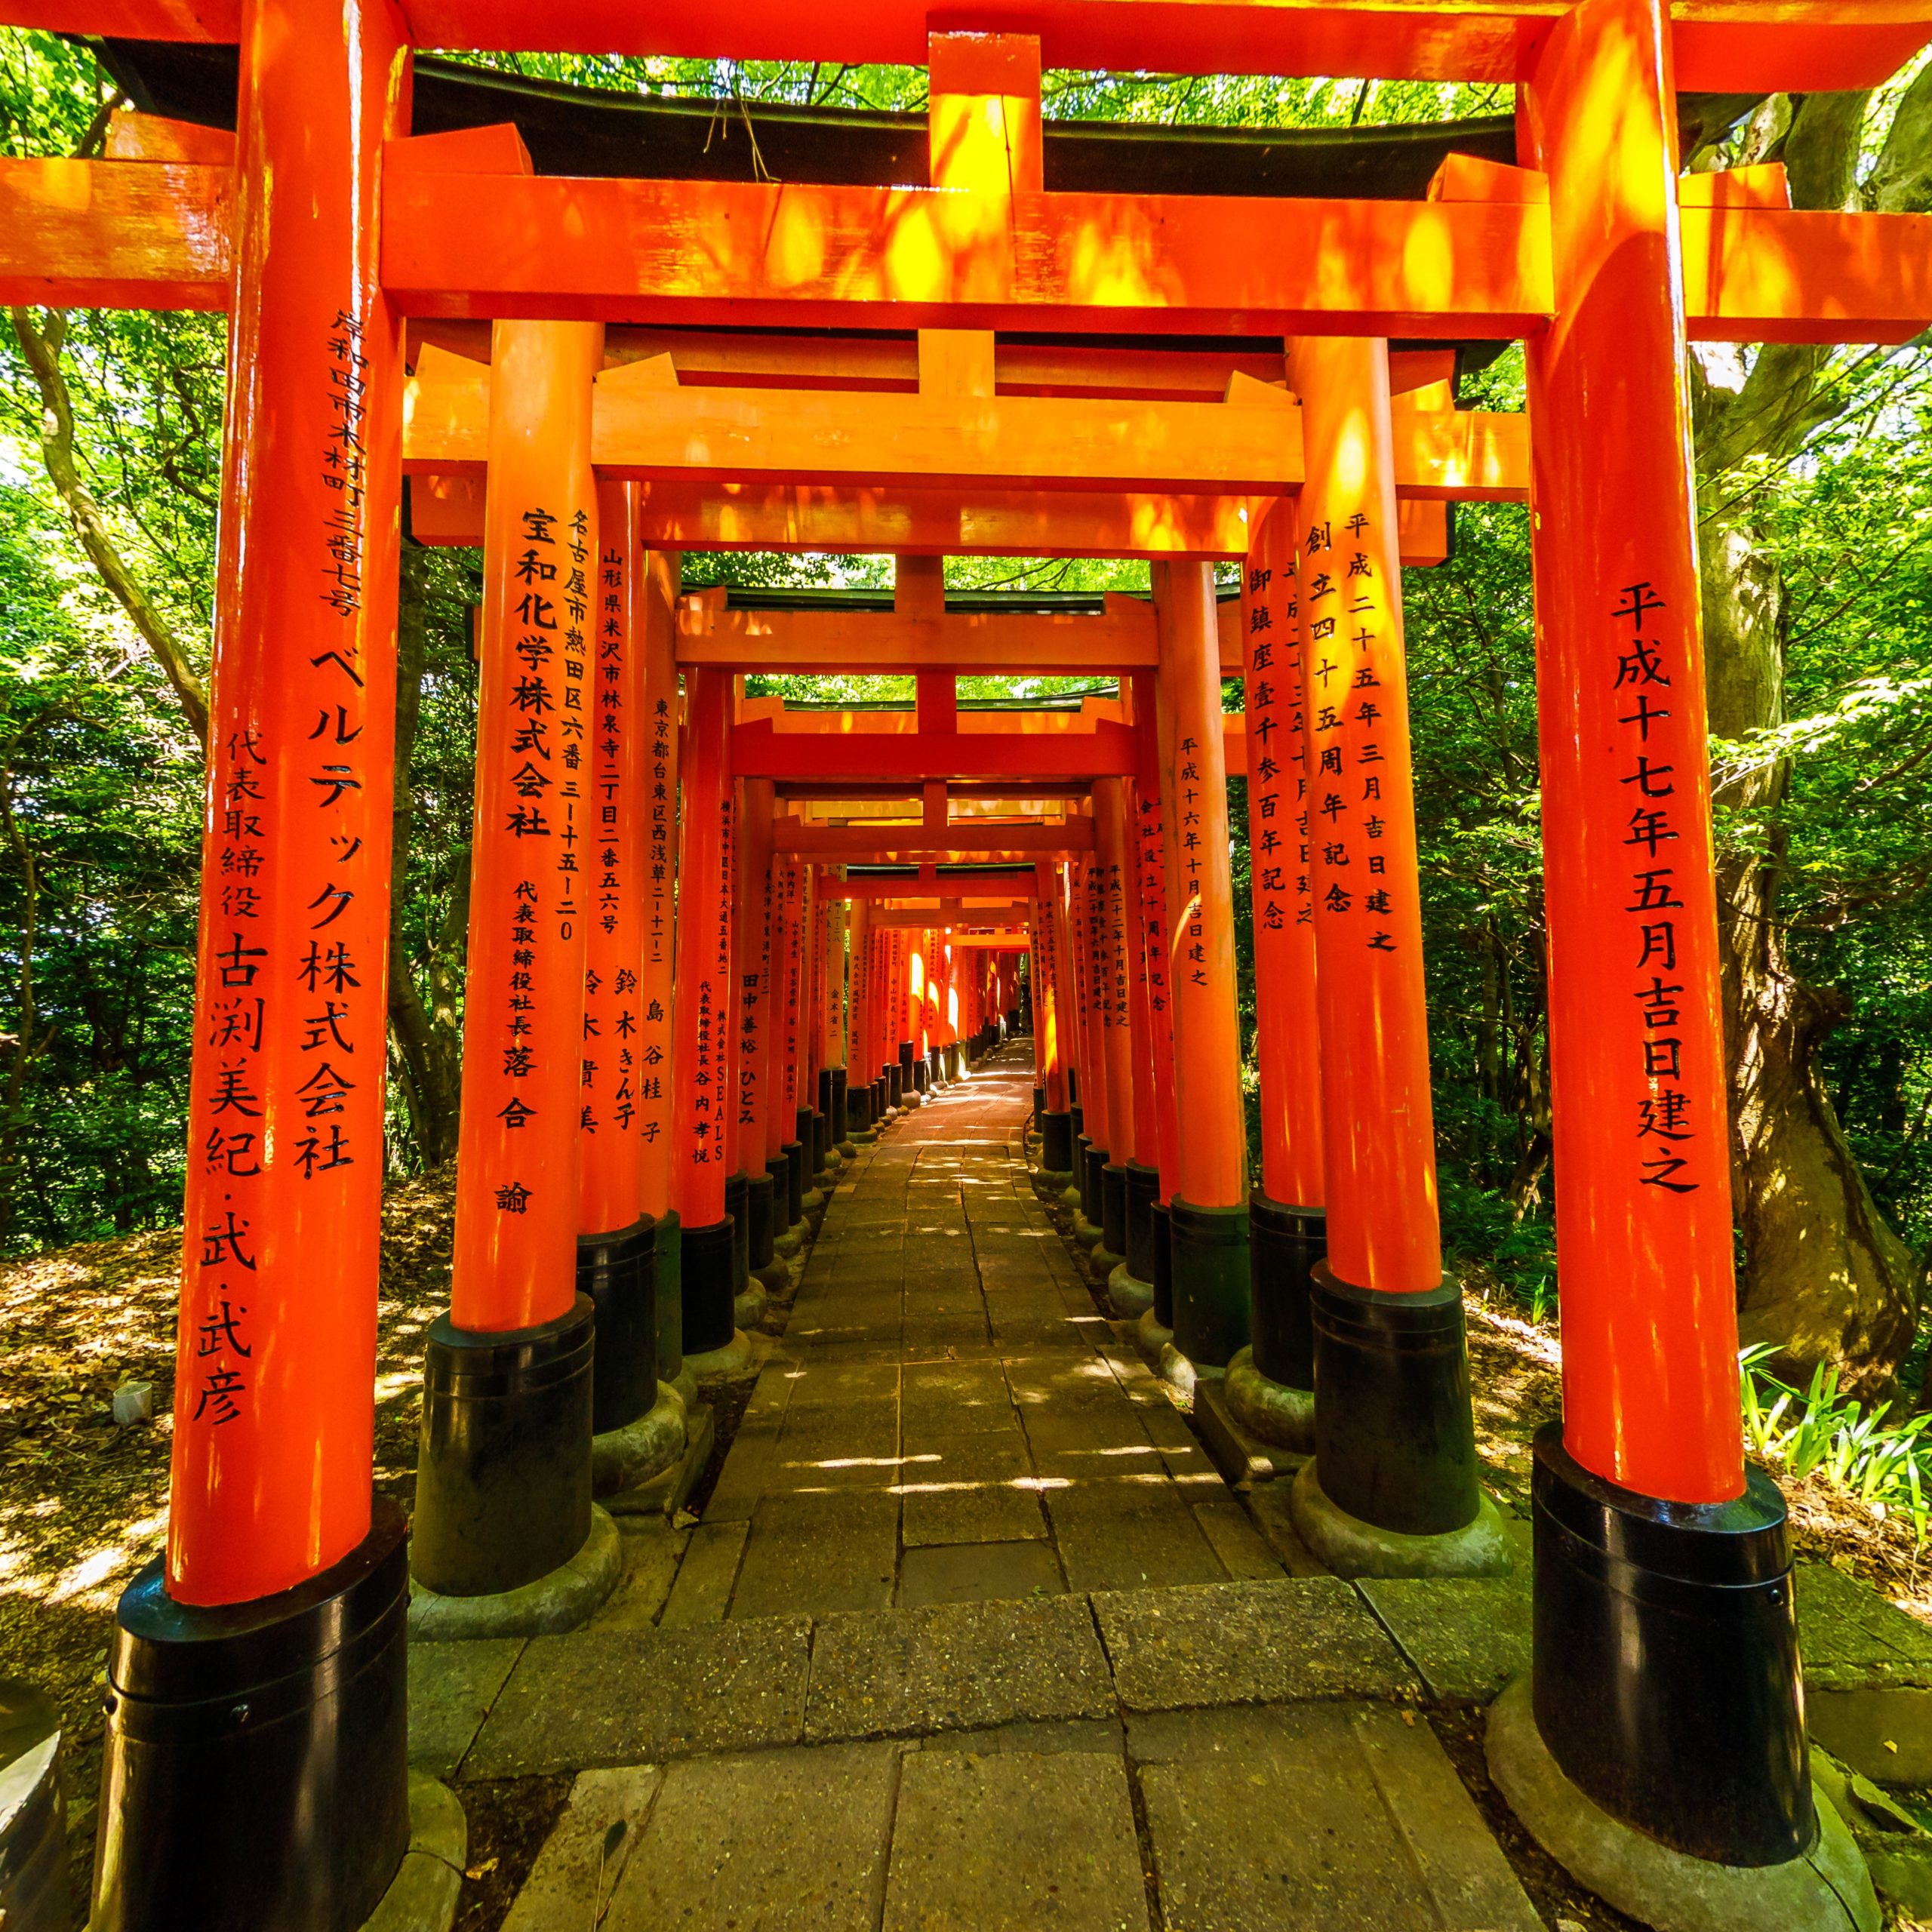 Le sanctuaire de Fushimi Inari